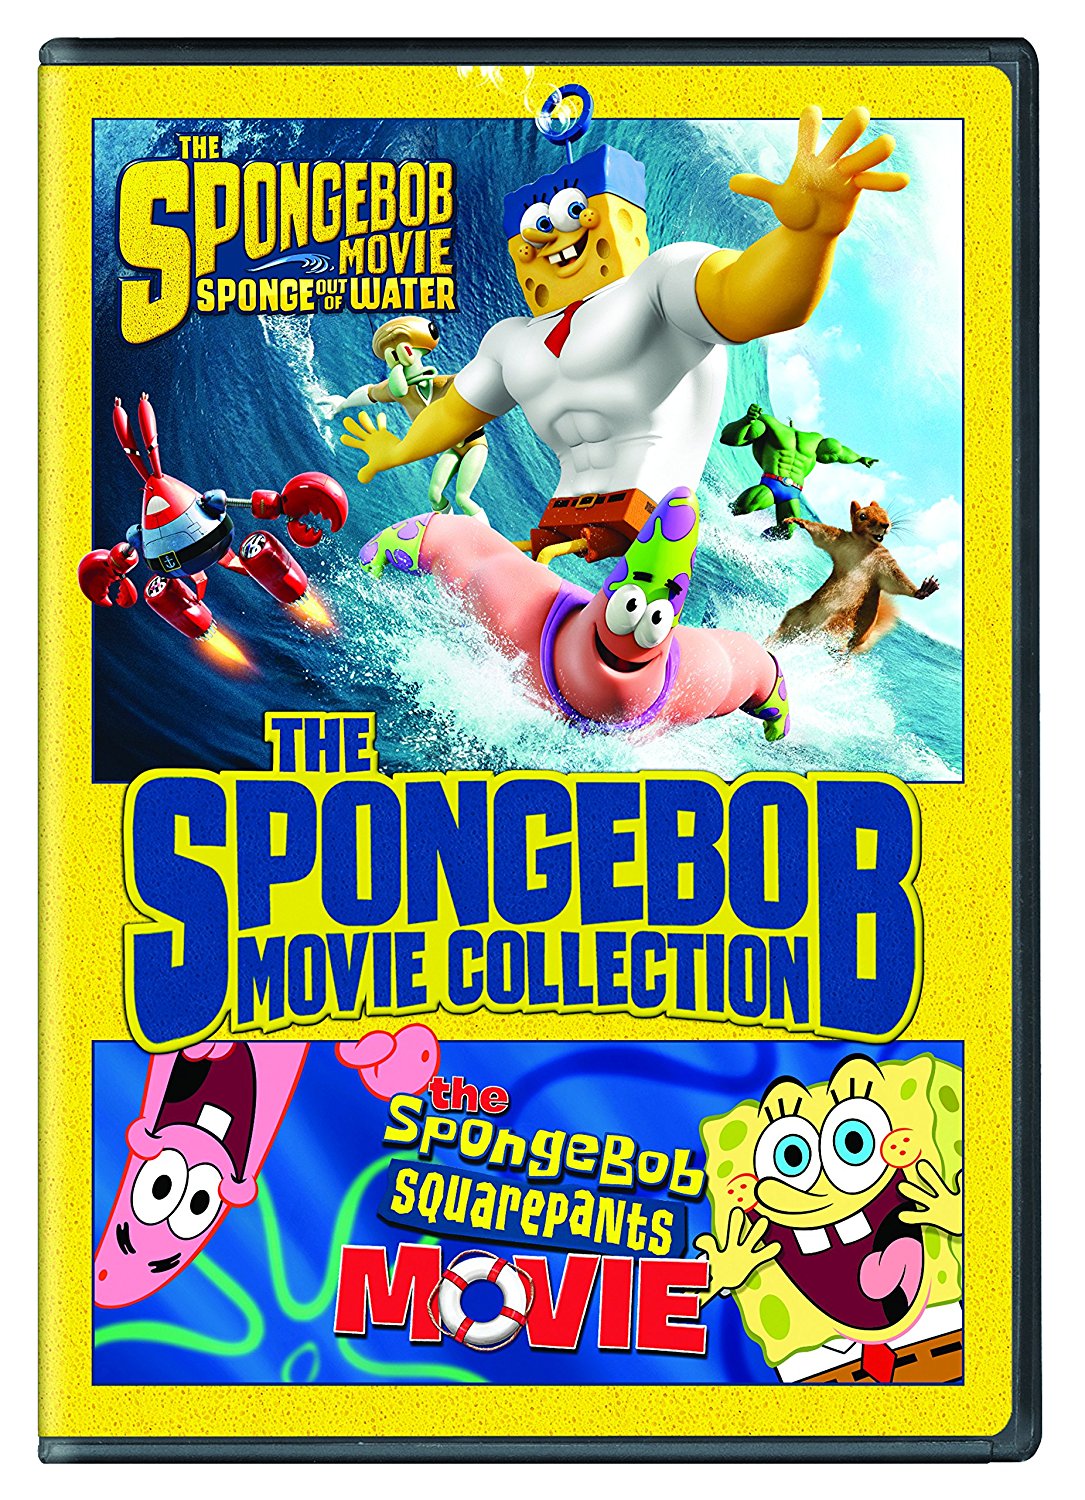 The SpongeBob Movie Collection